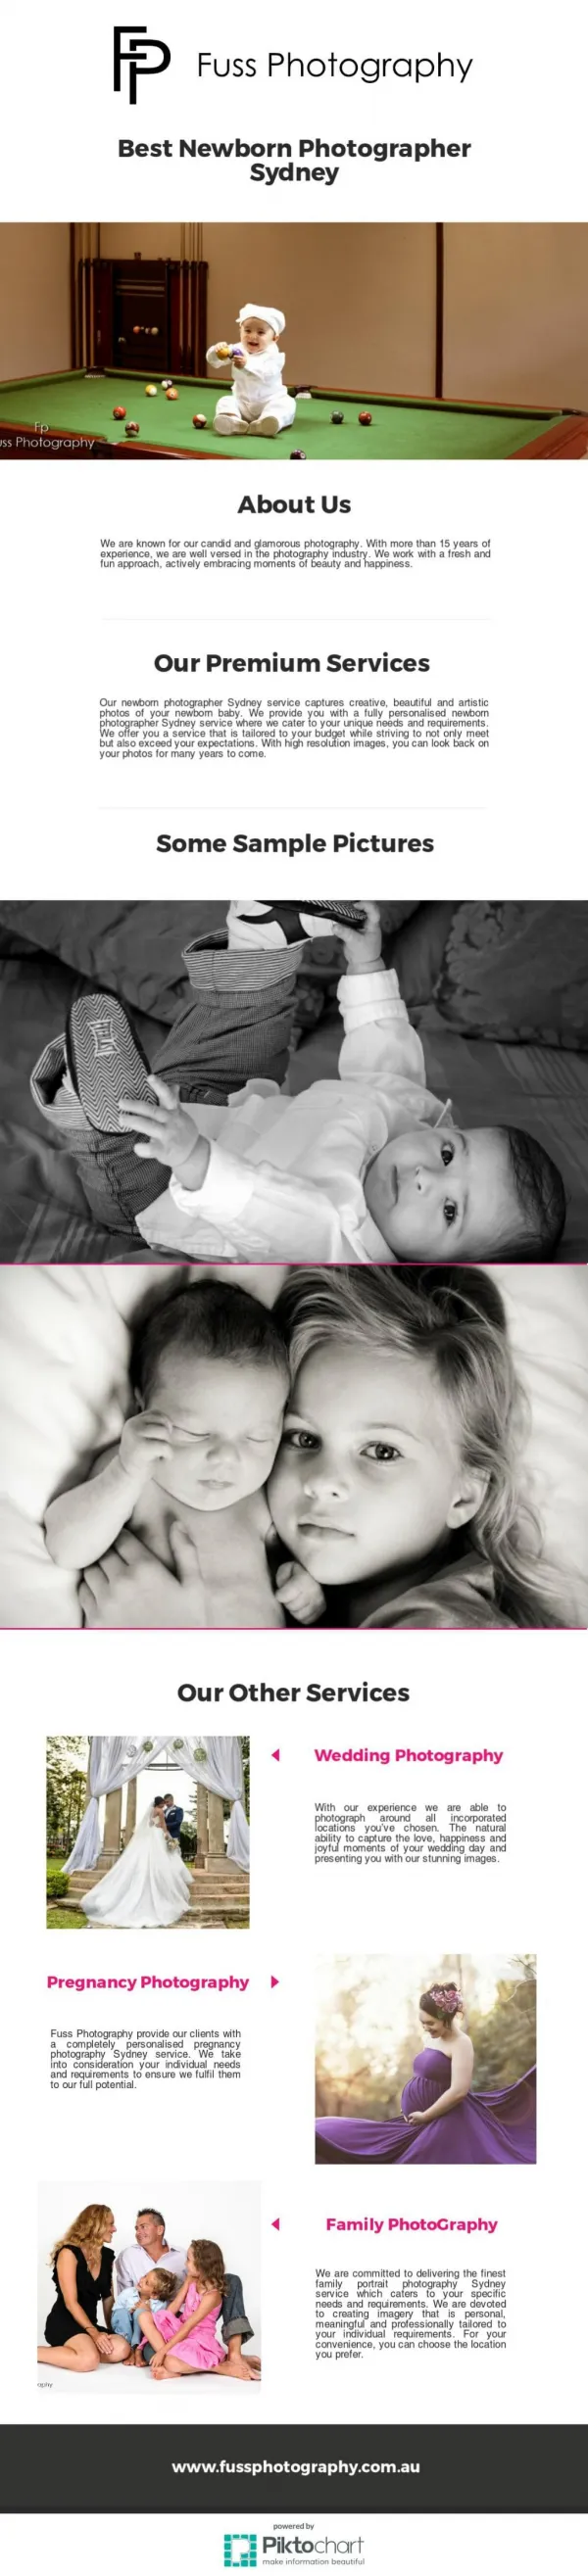 Need Professional Newborn Photographer Sydney?